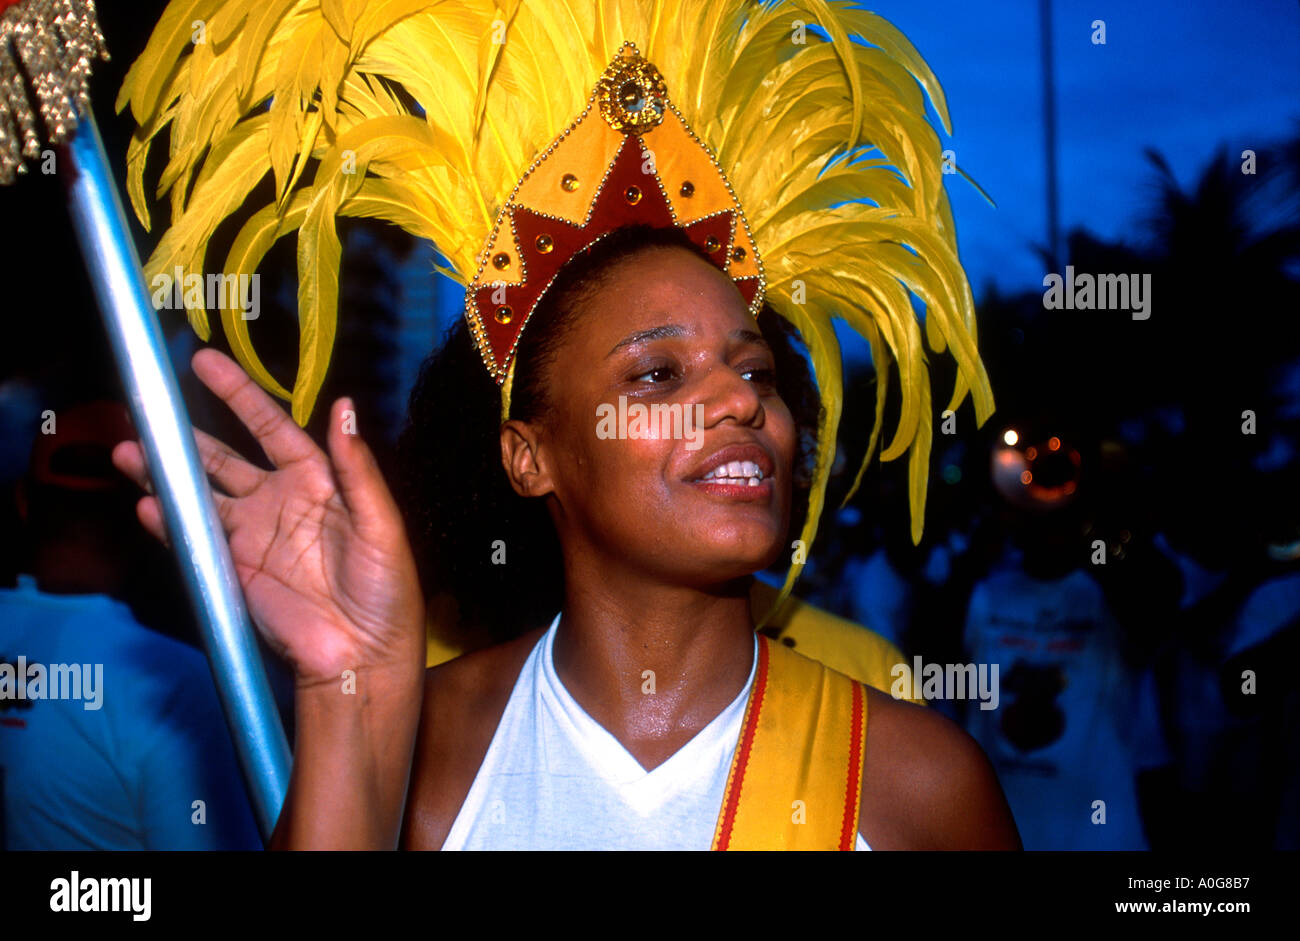 Bloco Cacique de Ramos, street Carnival of Rio de Janeiro, Brazil - women  dressed up as indigenous people Stock Photo - Alamy